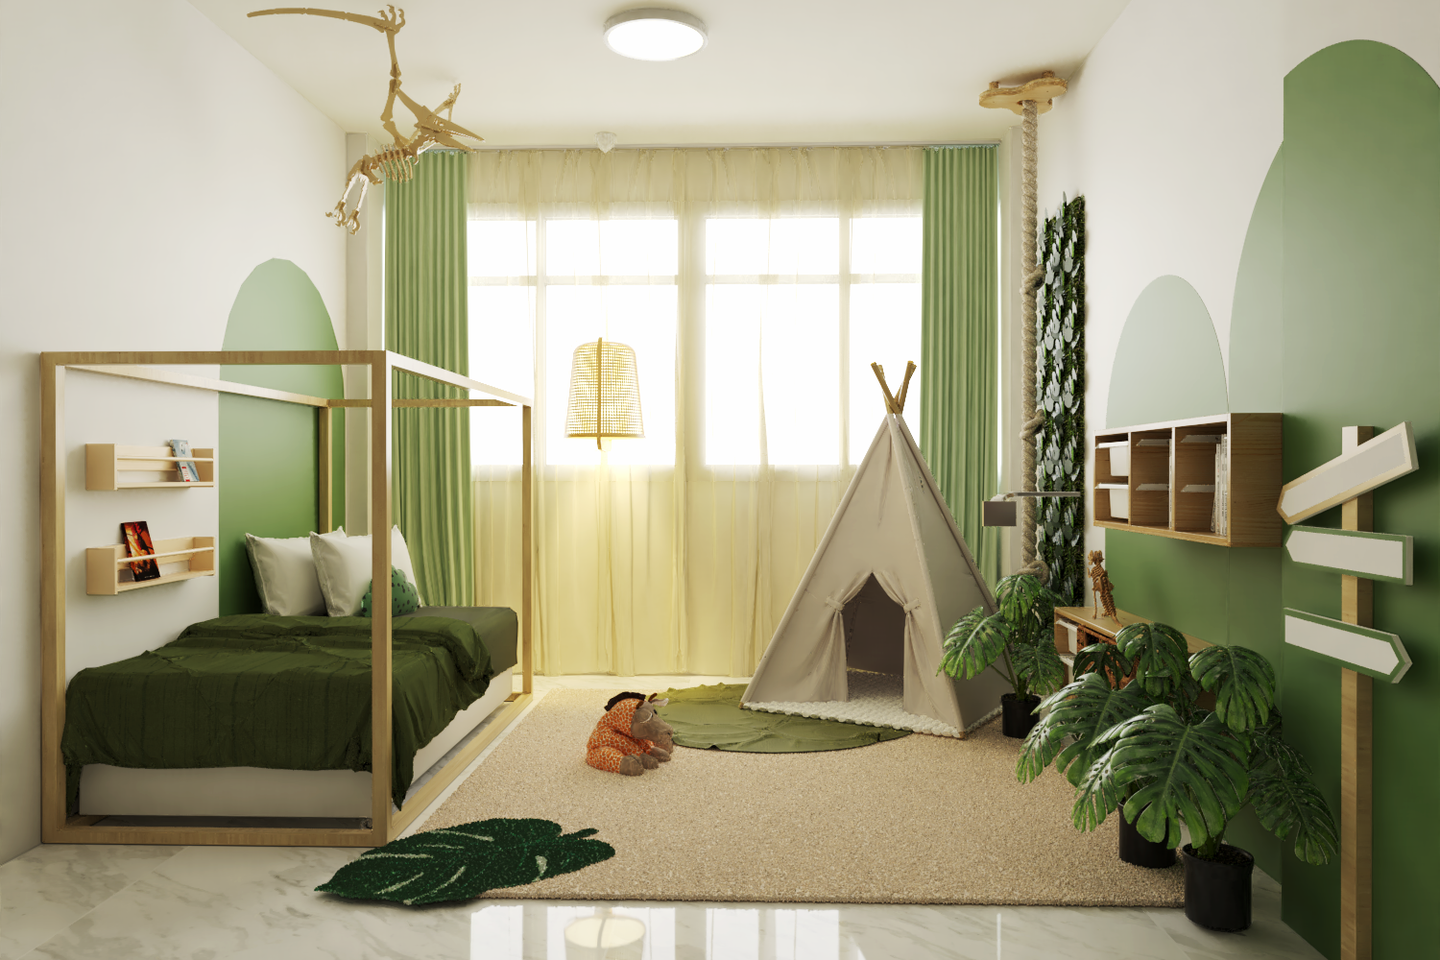 Tropical Forest Themed Bedroom Design For Kids - Livspace